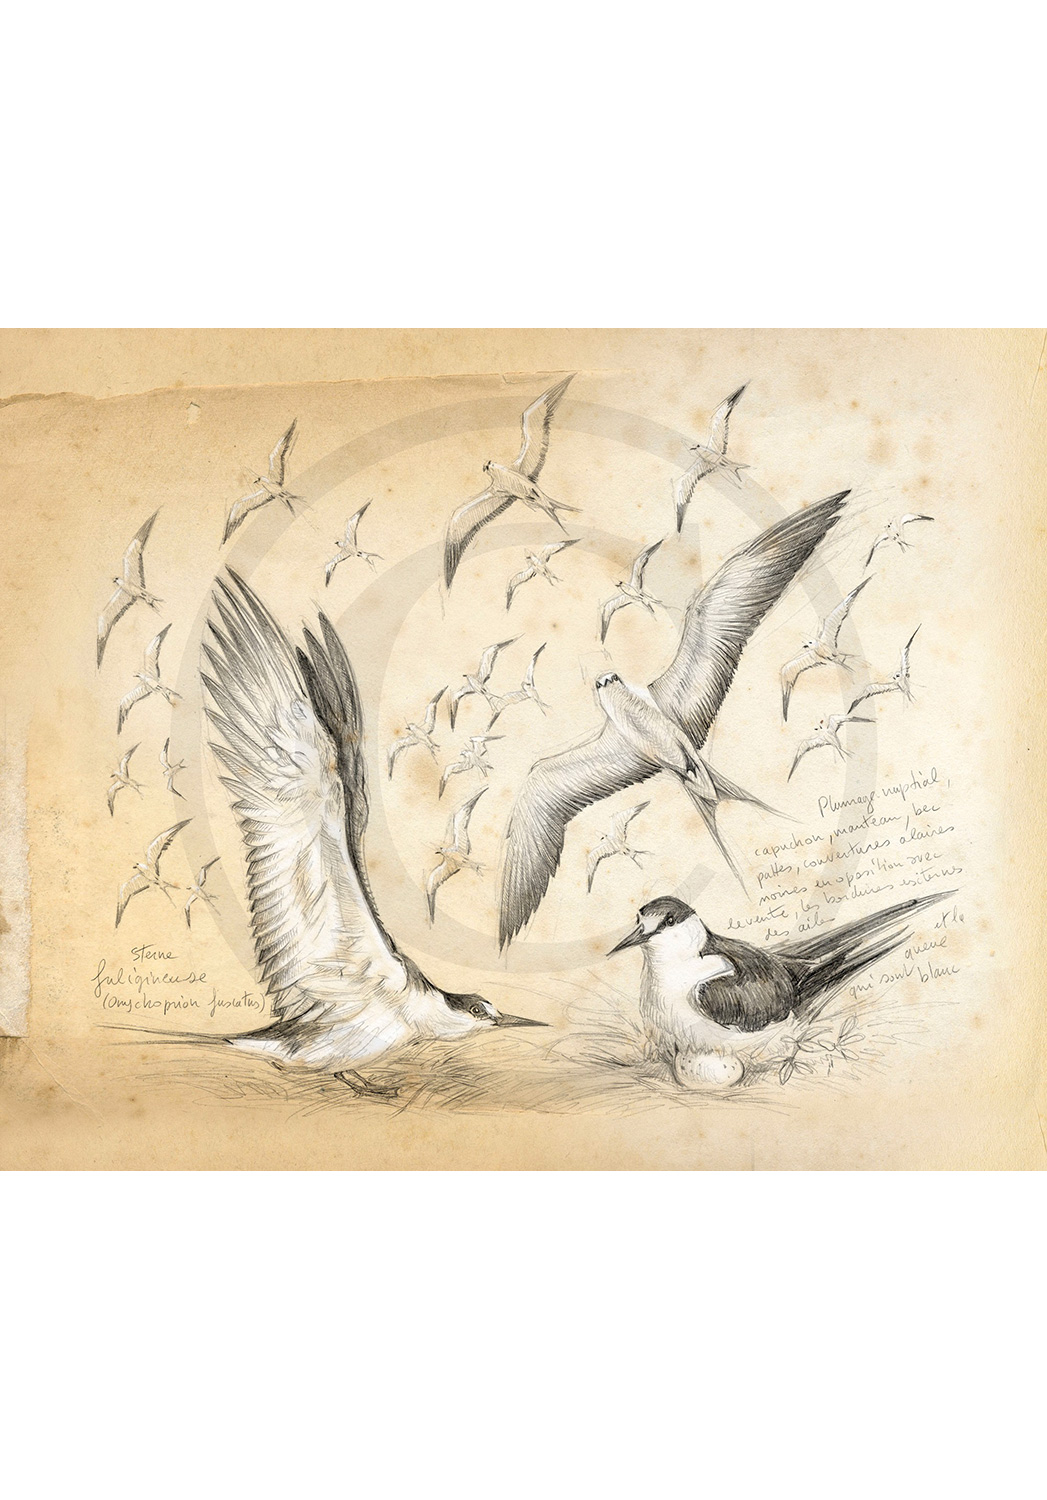 Marcello-art : Ornithologie 337 - Sternes fuligineuses